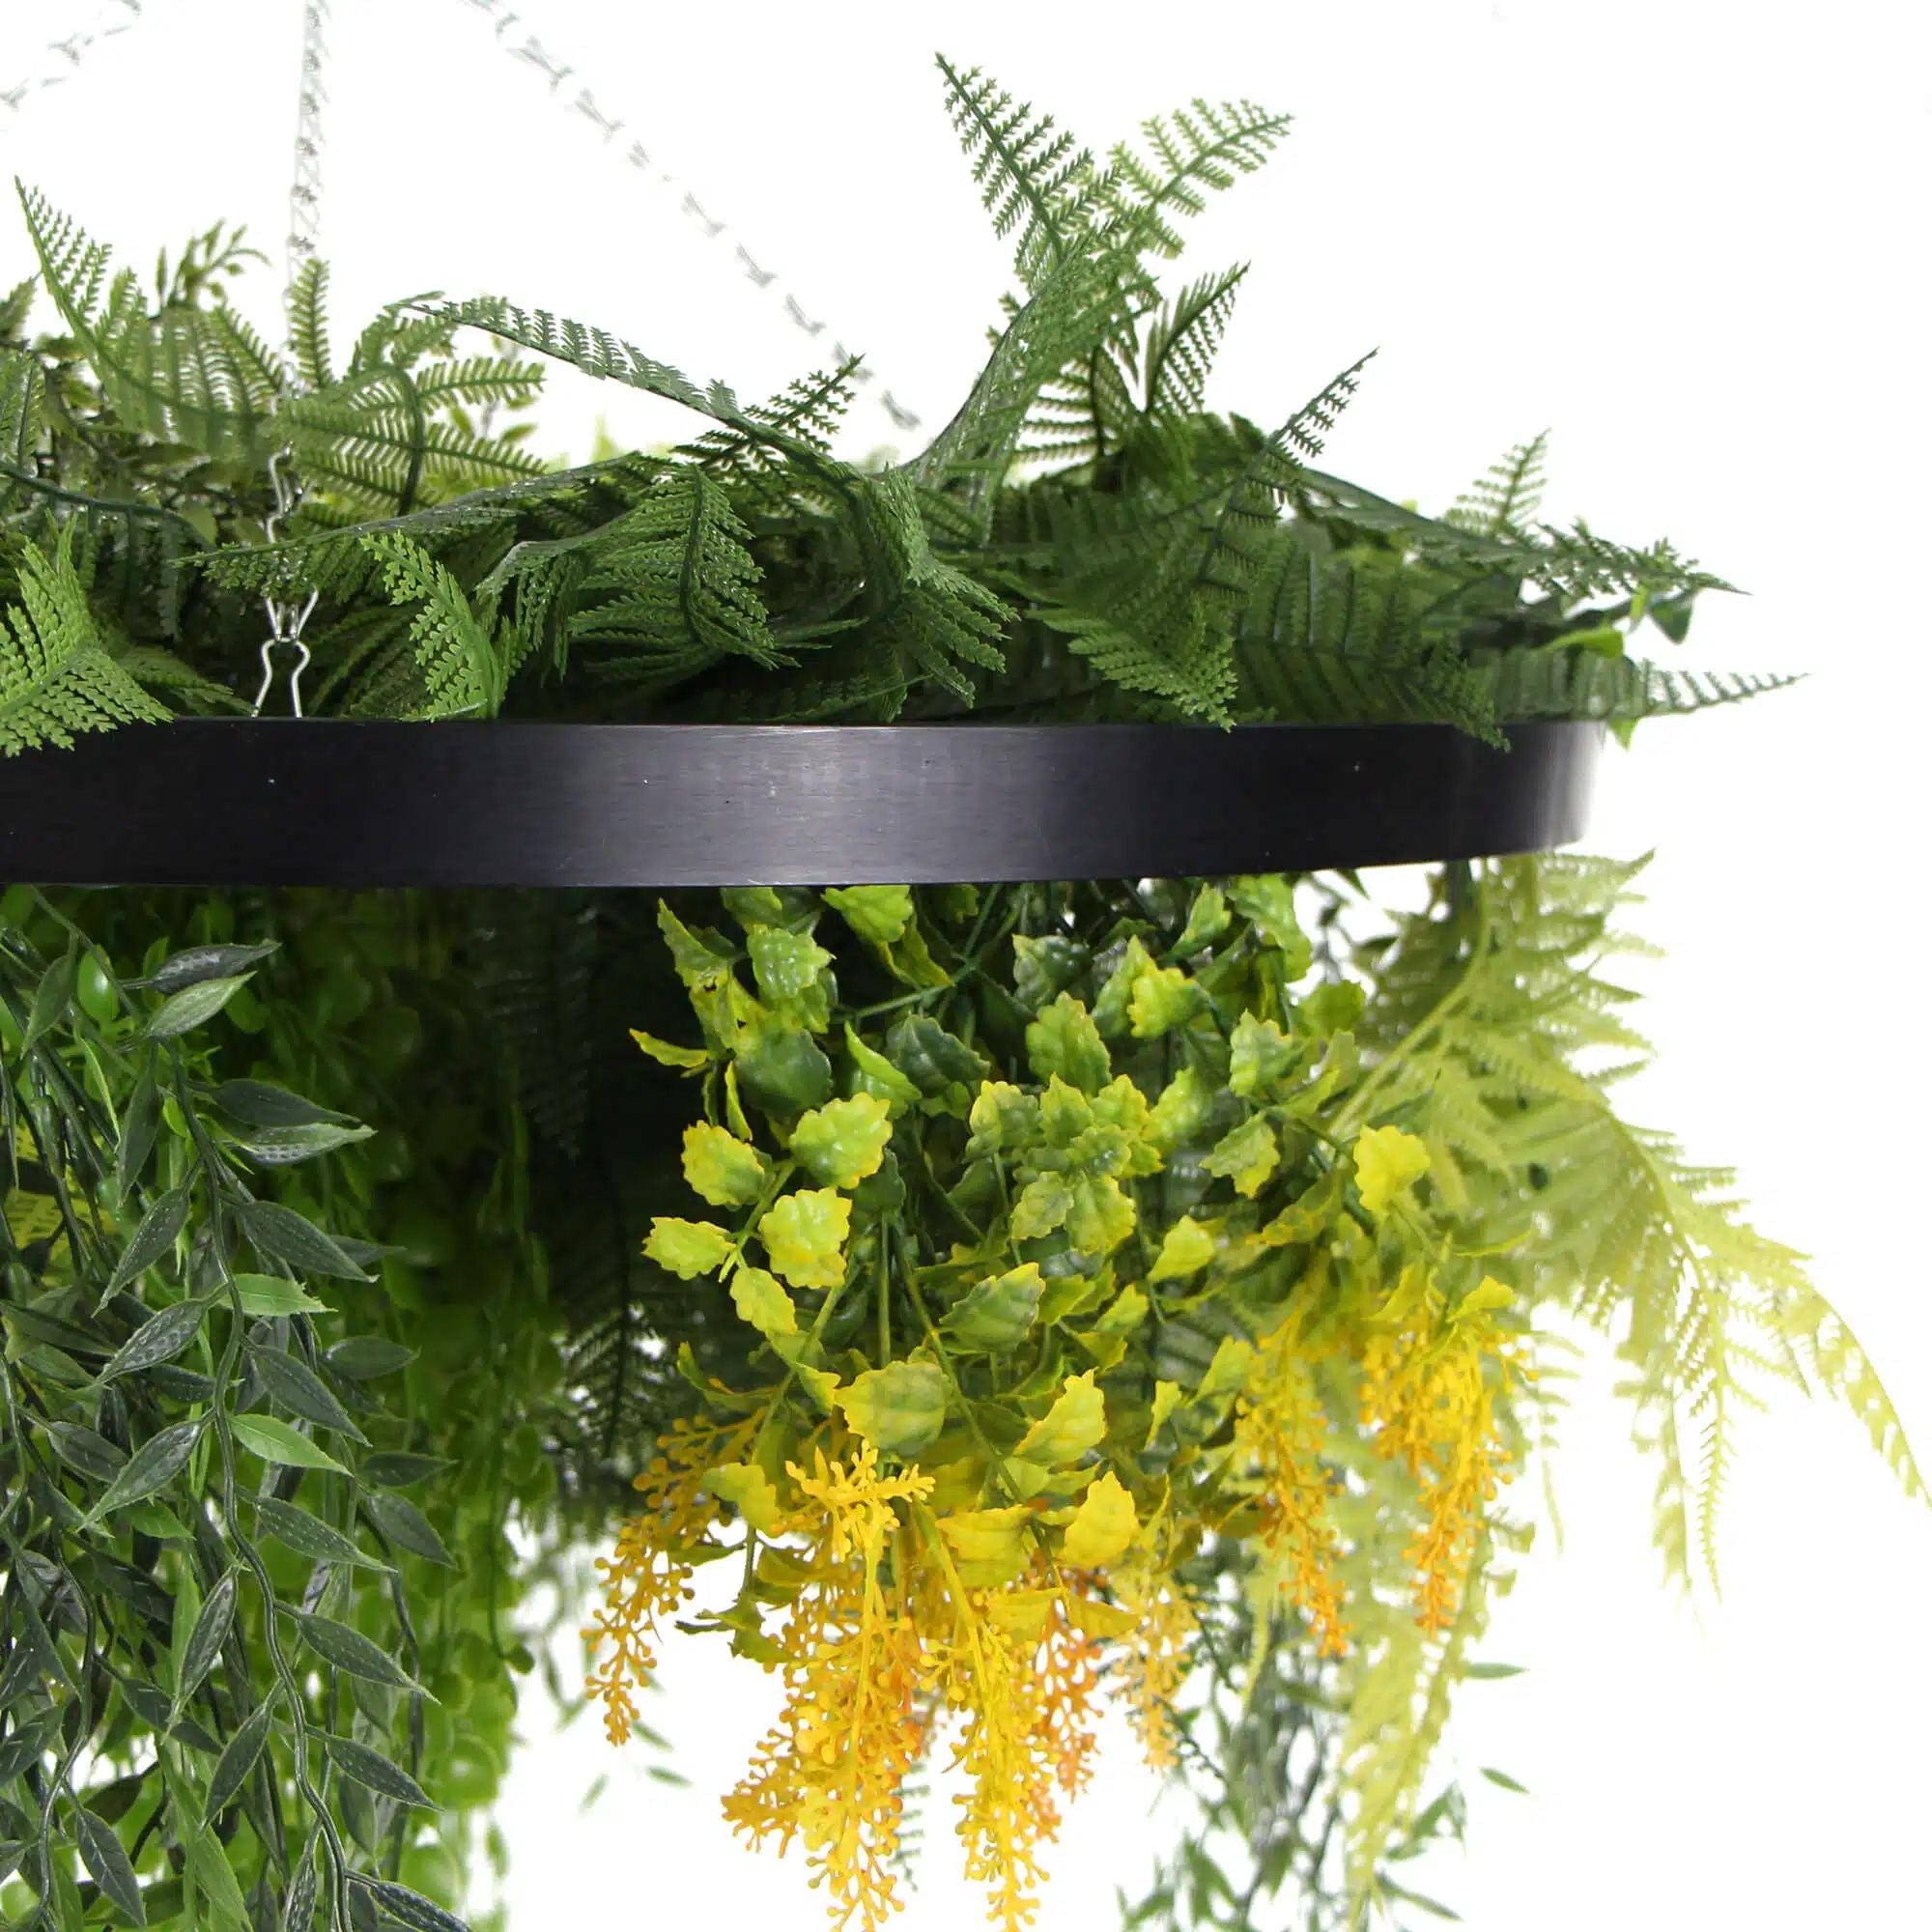 Black Framed Roof Hanging Disc With Draping Life-Like Plants 60cm - Designer Vertical Gardens hanging plants